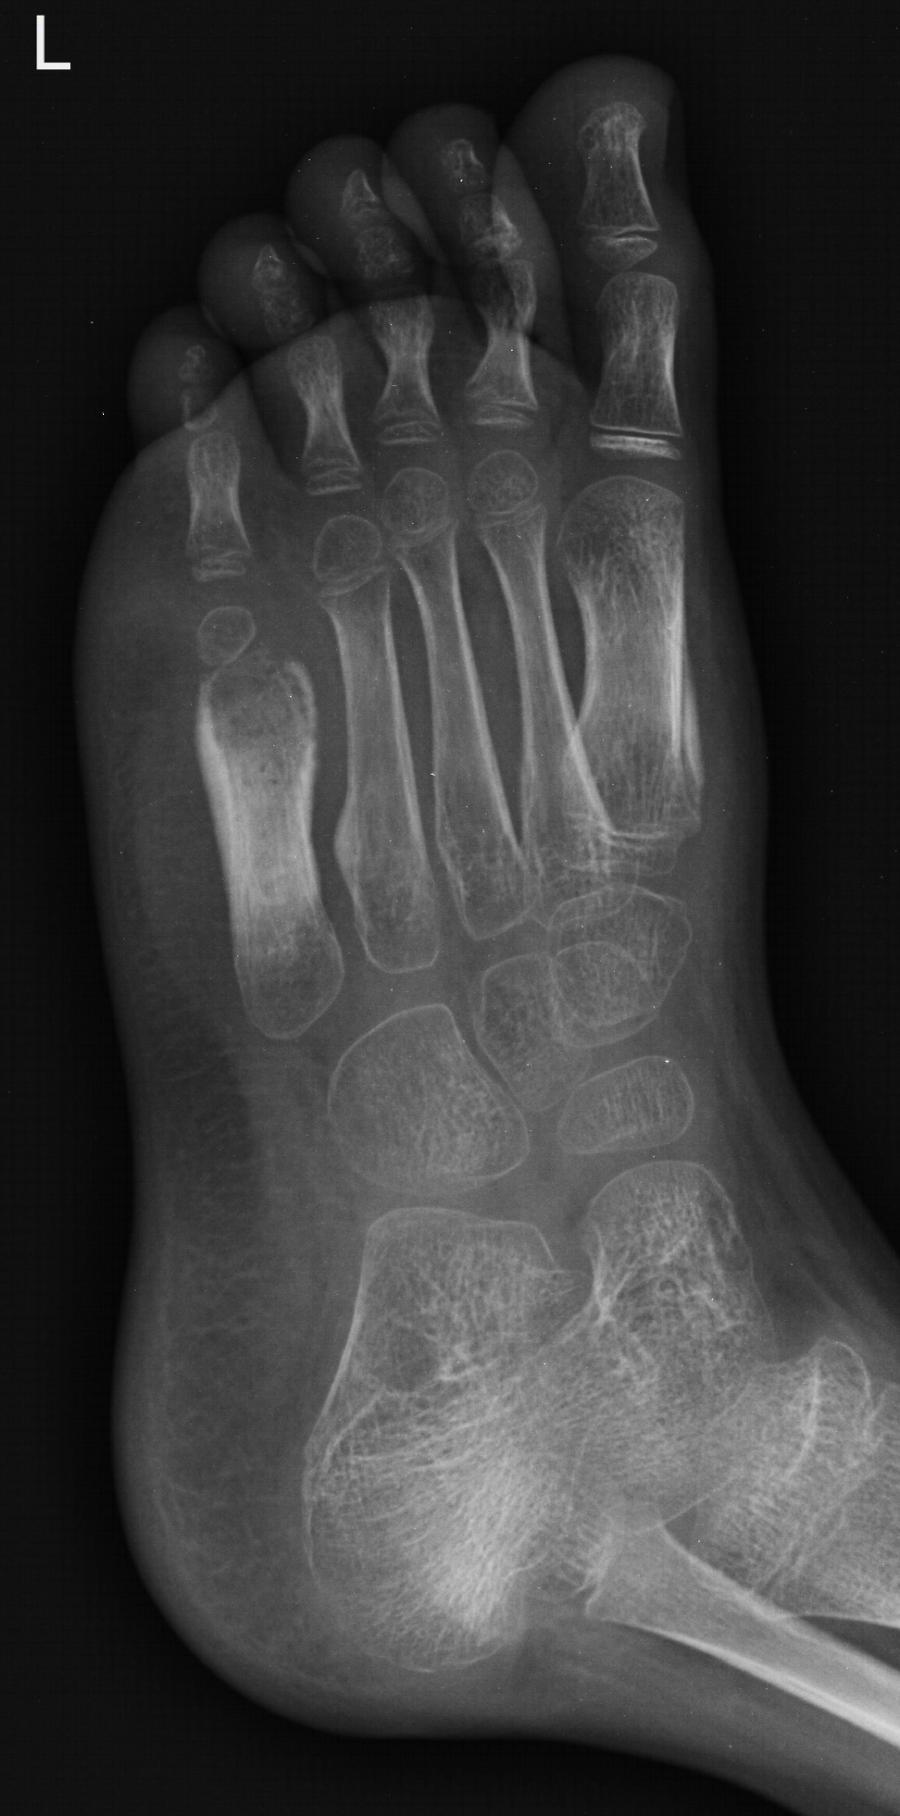 Röntgenbild rechter Fuß